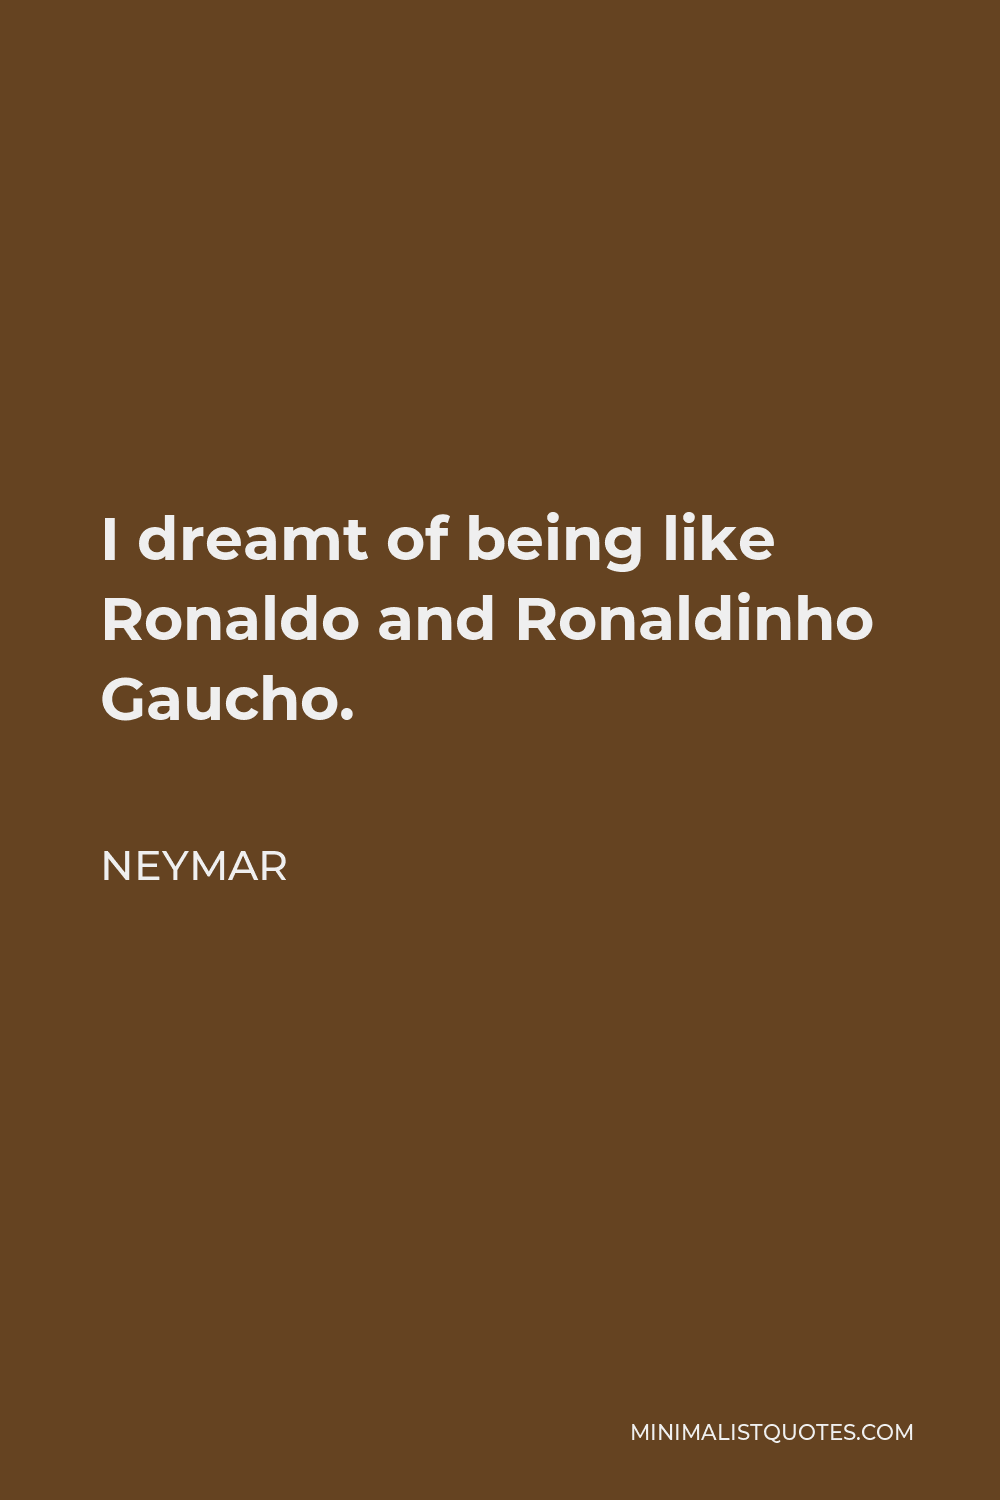 Neymar Quote - I dreamt of being like Ronaldo and Ronaldinho Gaucho.